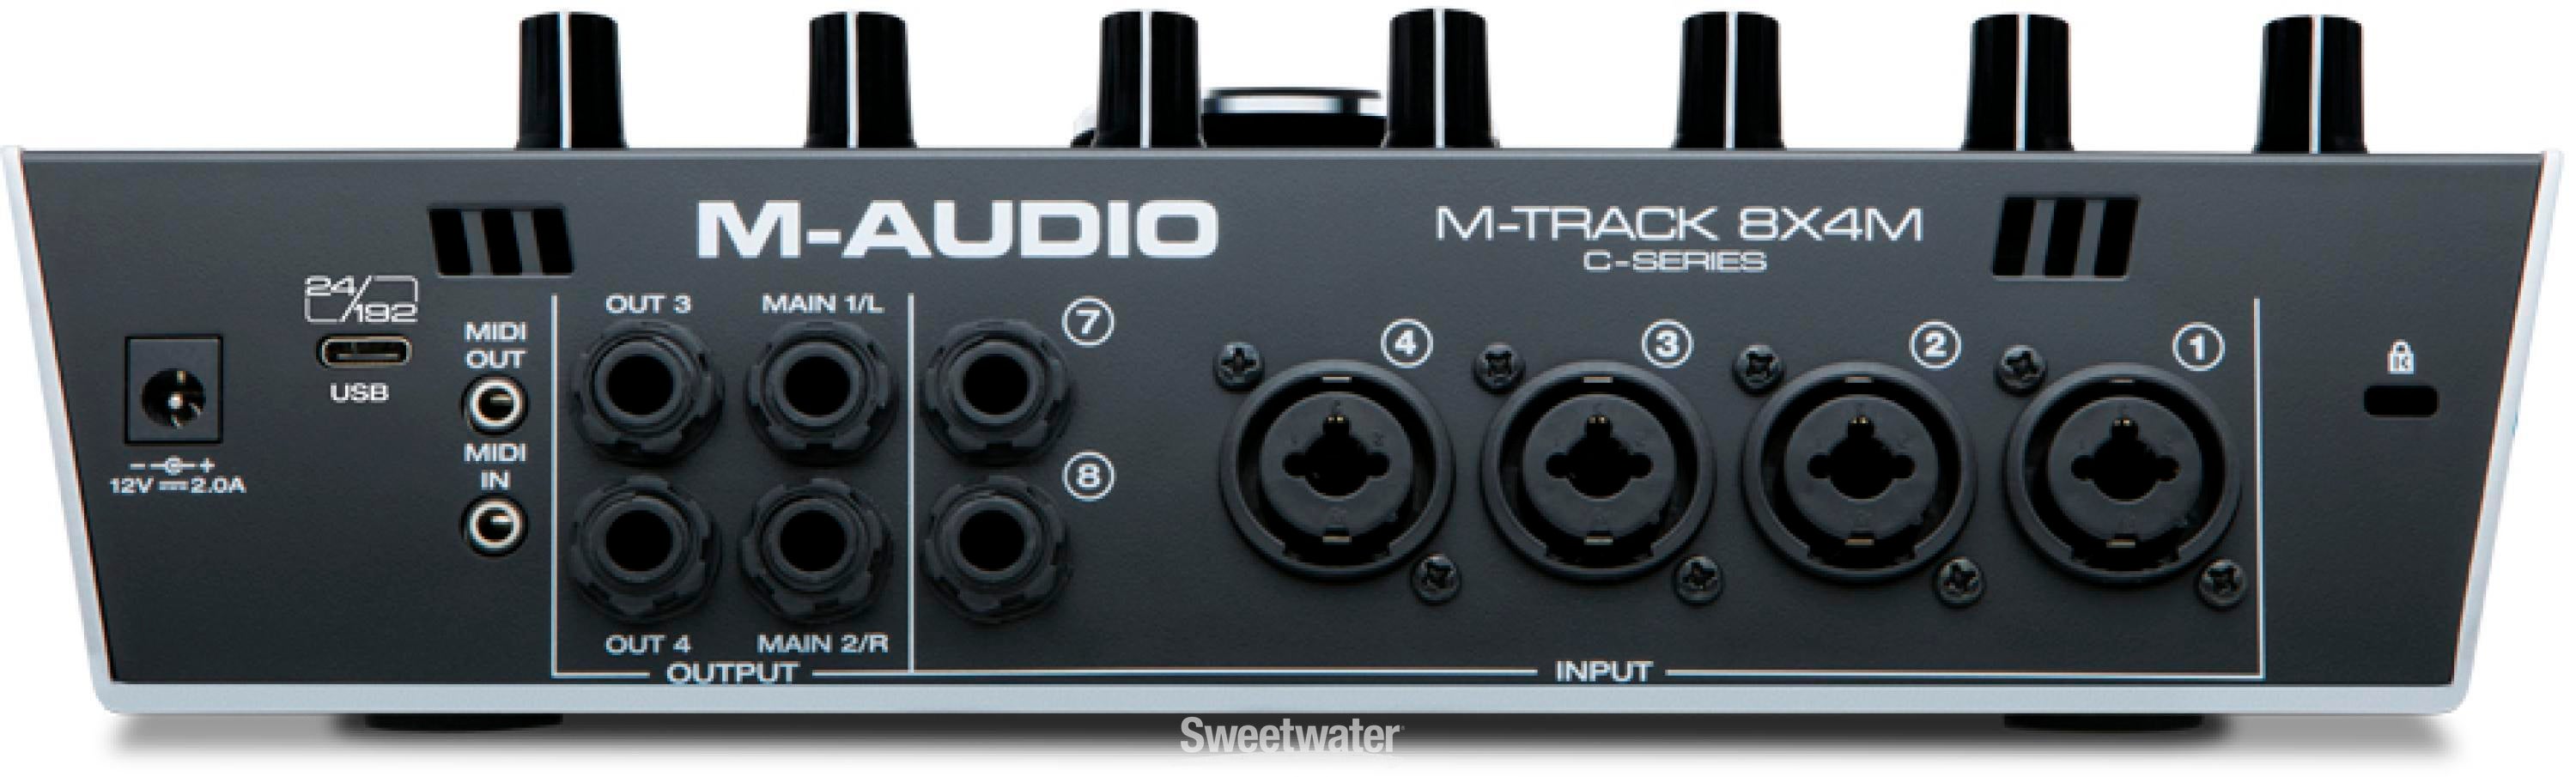 M-Audio M-Track 8X4M USB Audio / MIDI Interface | Sweetwater